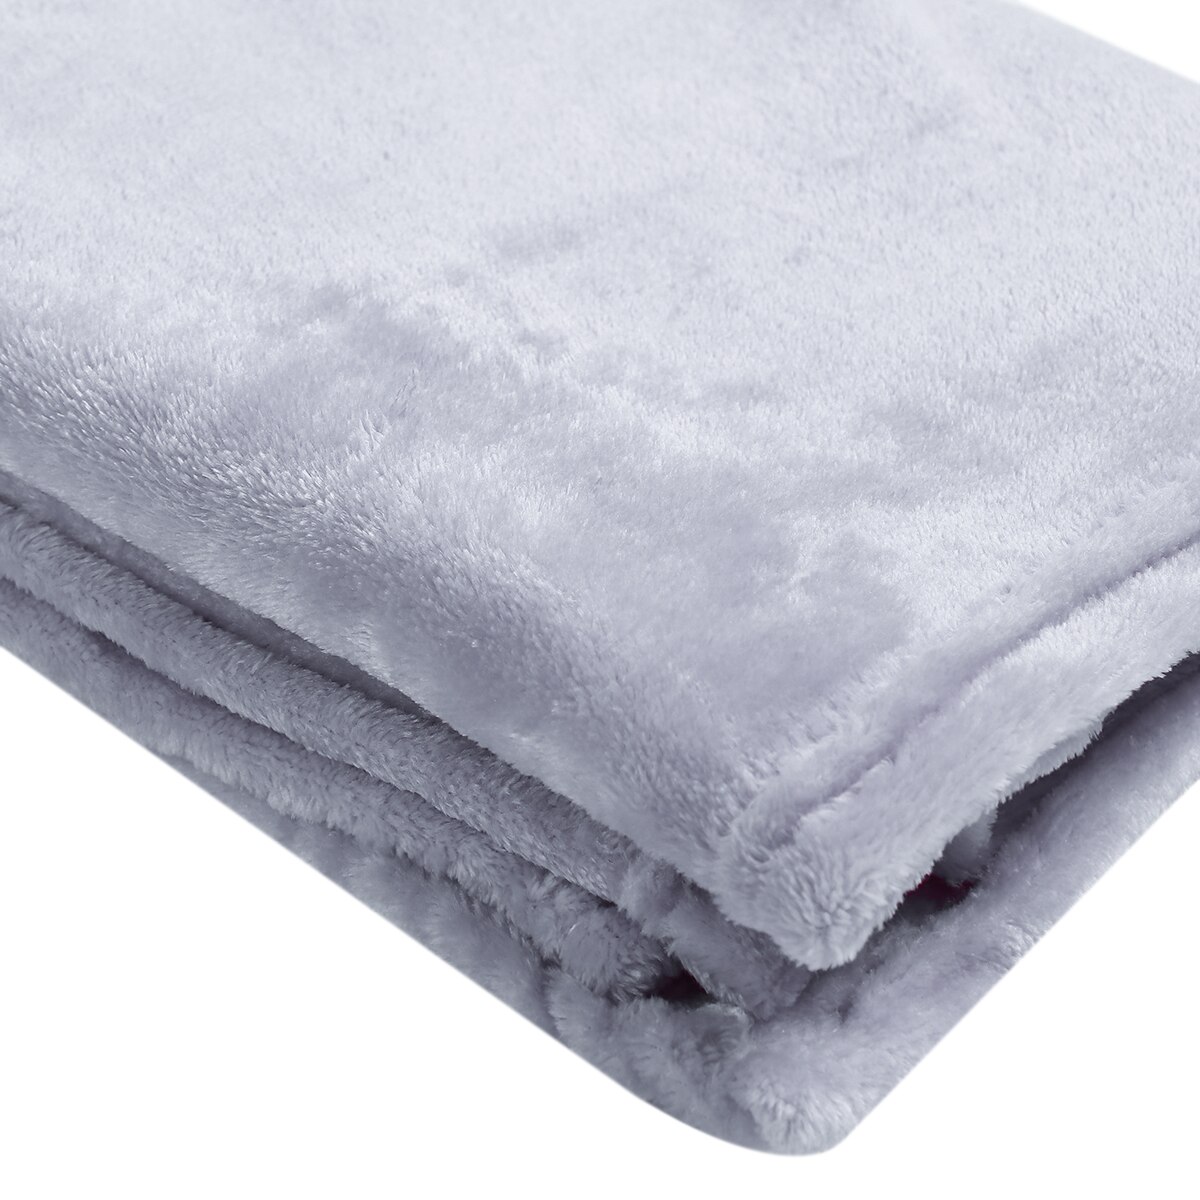 Super blødt varm massiv varm mikro plys fleece tæppe kaste tæppe sovesofa